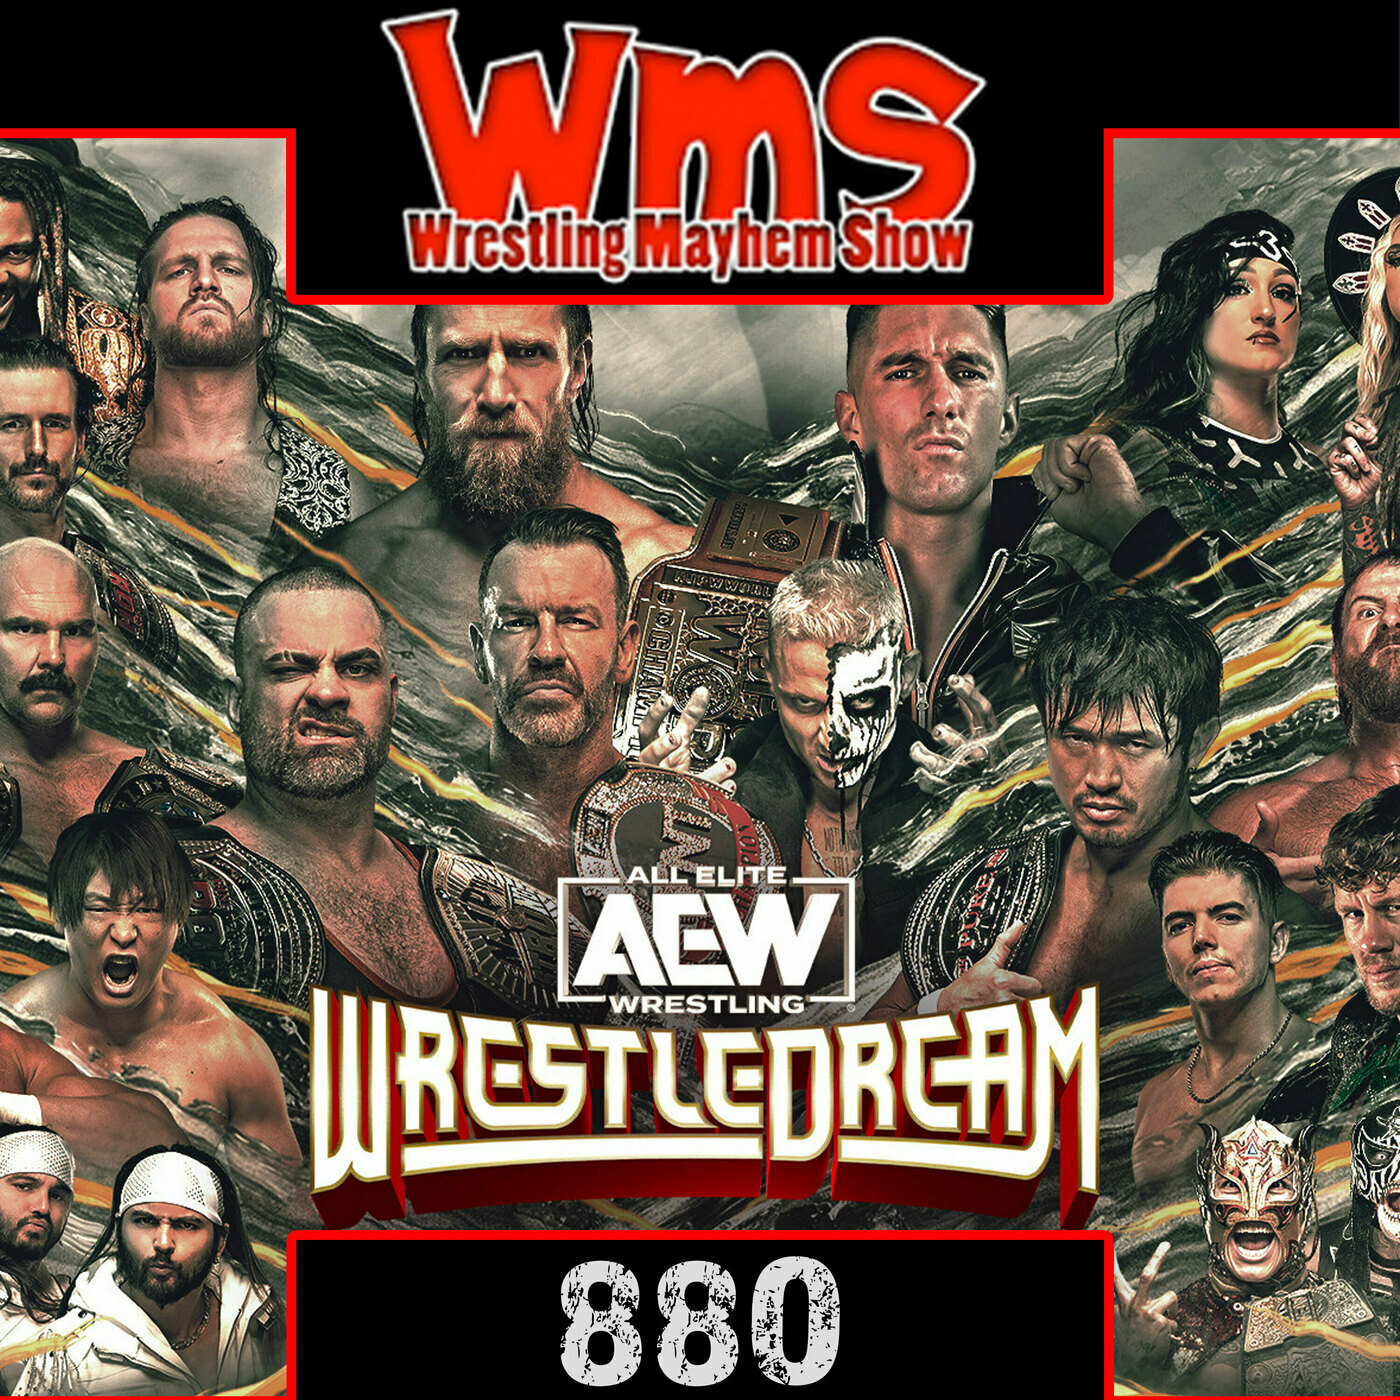 Wrestling Mayhem Show: A WrestleDream of Little or No Mercy | Wrestling Mayhem Show 880